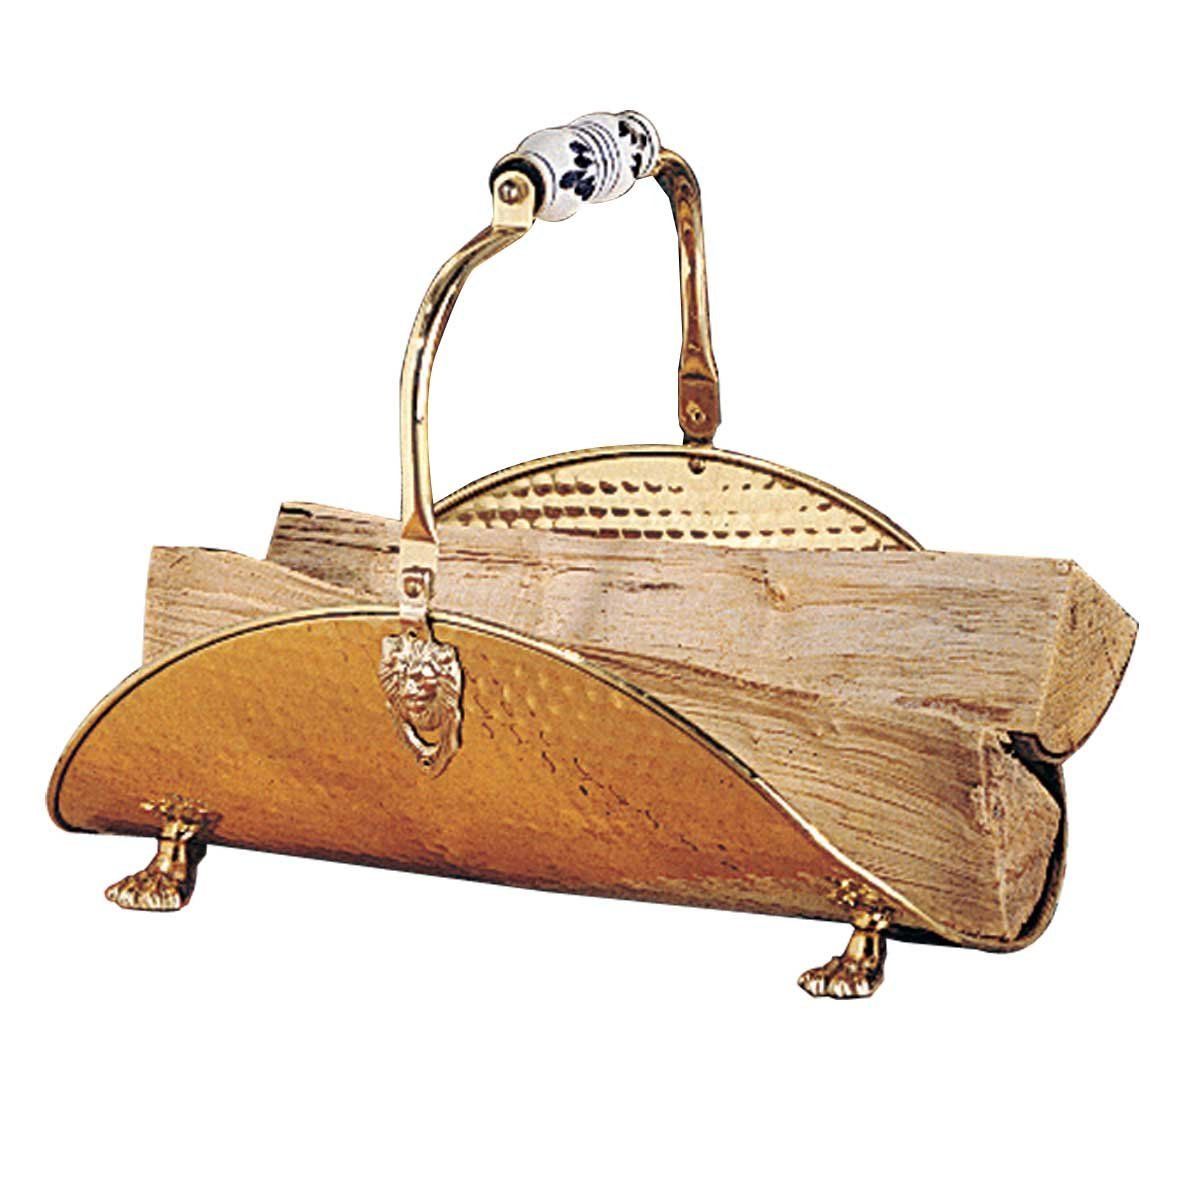 Pilgrim Fireplace tools Luxury Amazon Fireplace Accessories Brass Brass Fireplace